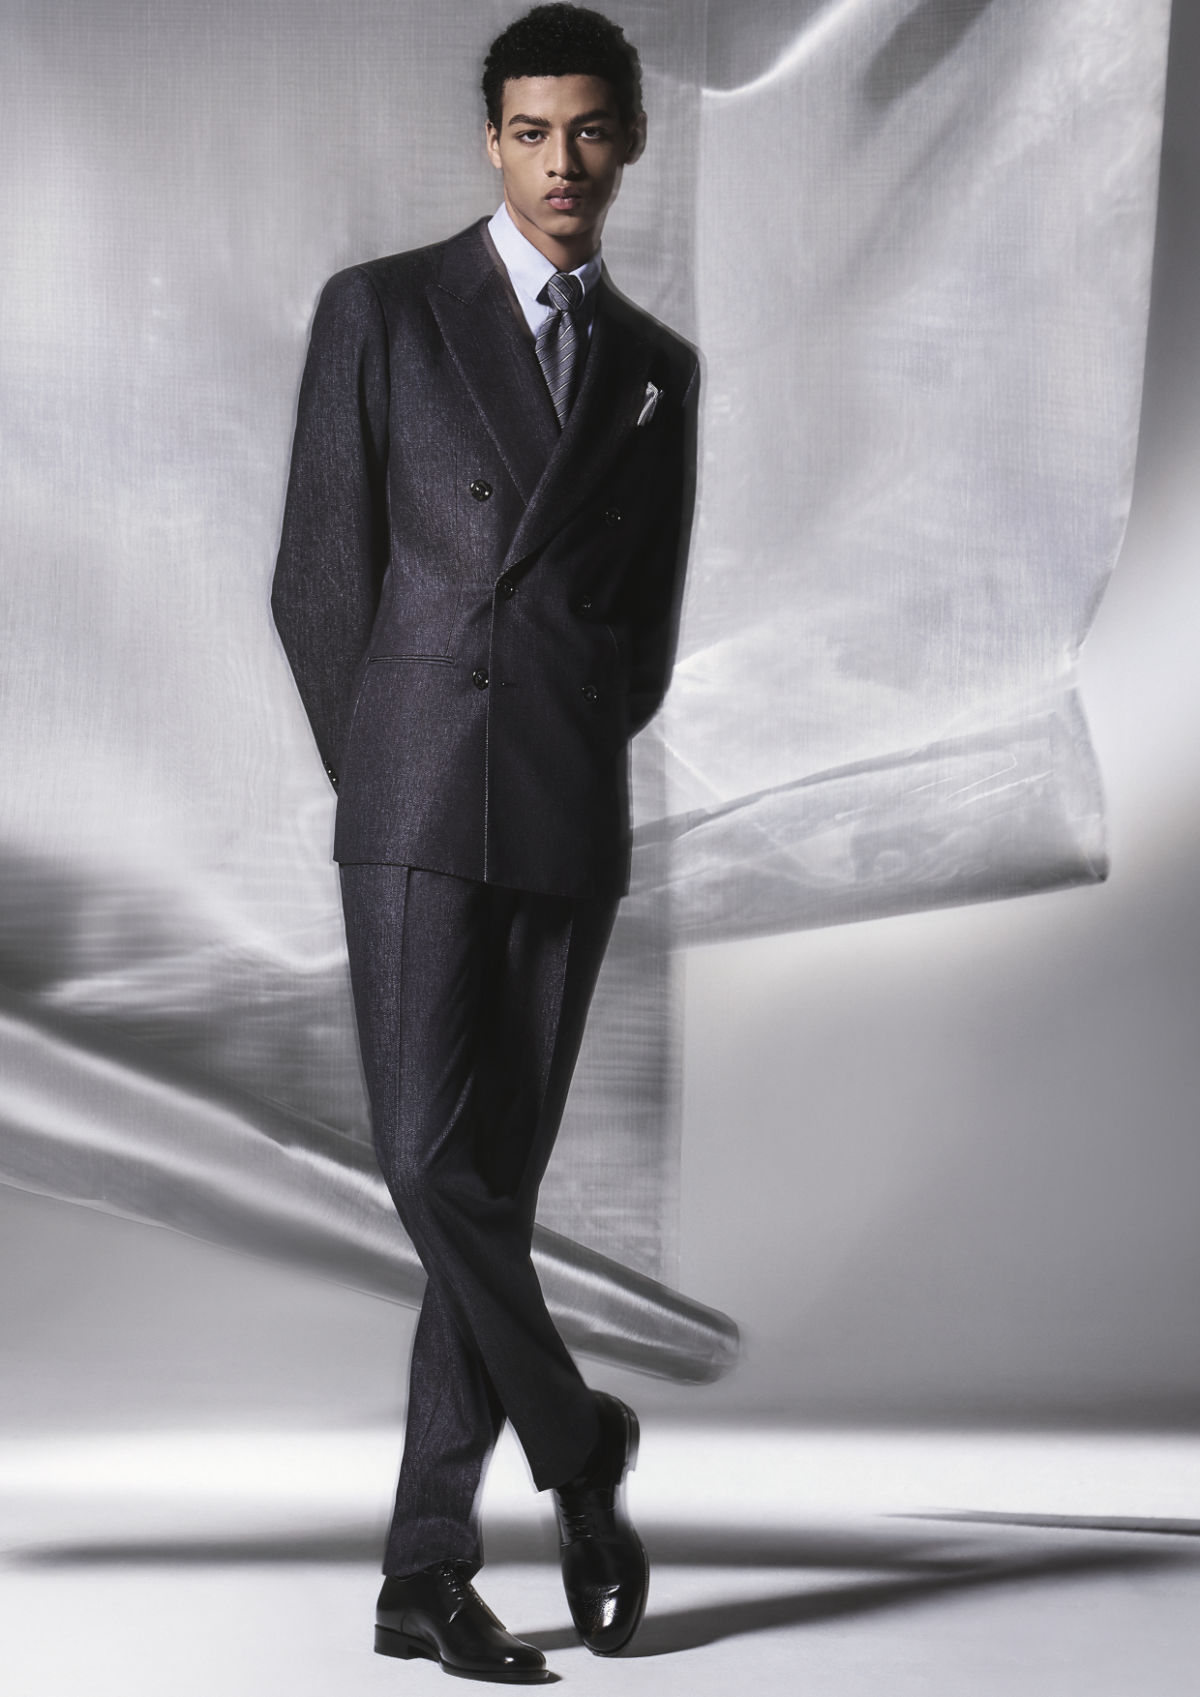 Giorgio Armani Made To Measure: Bespoke Italian Tailoring